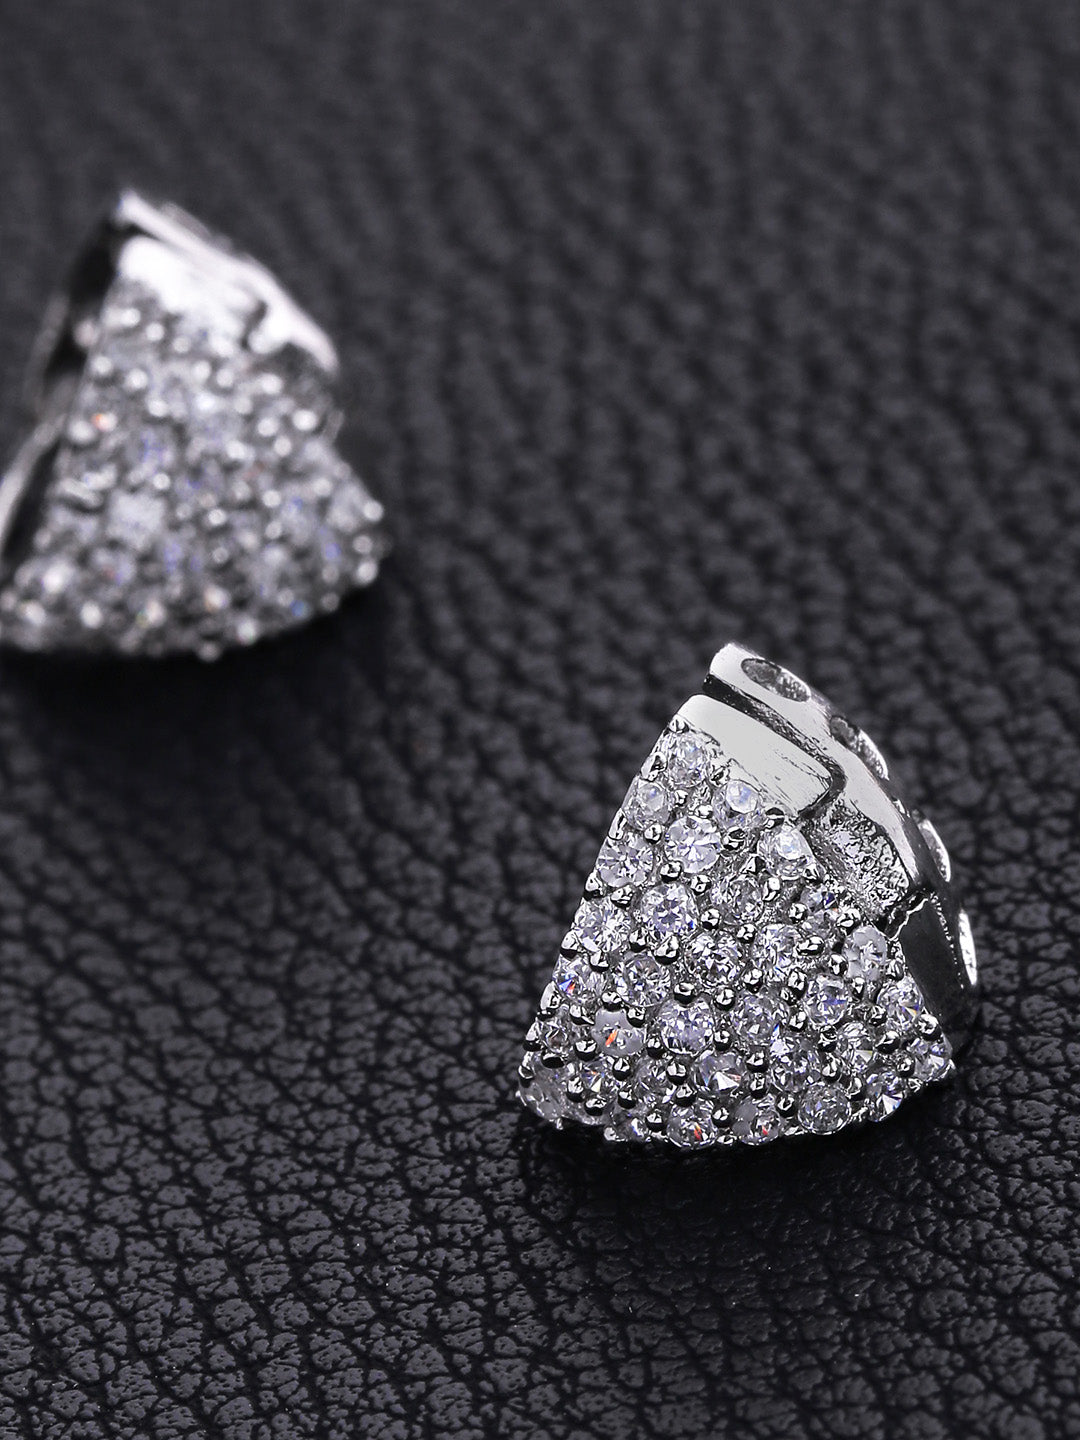 Silver Plated American Diamond Studded Hoop Like Geometric Shaped Bali Earrings